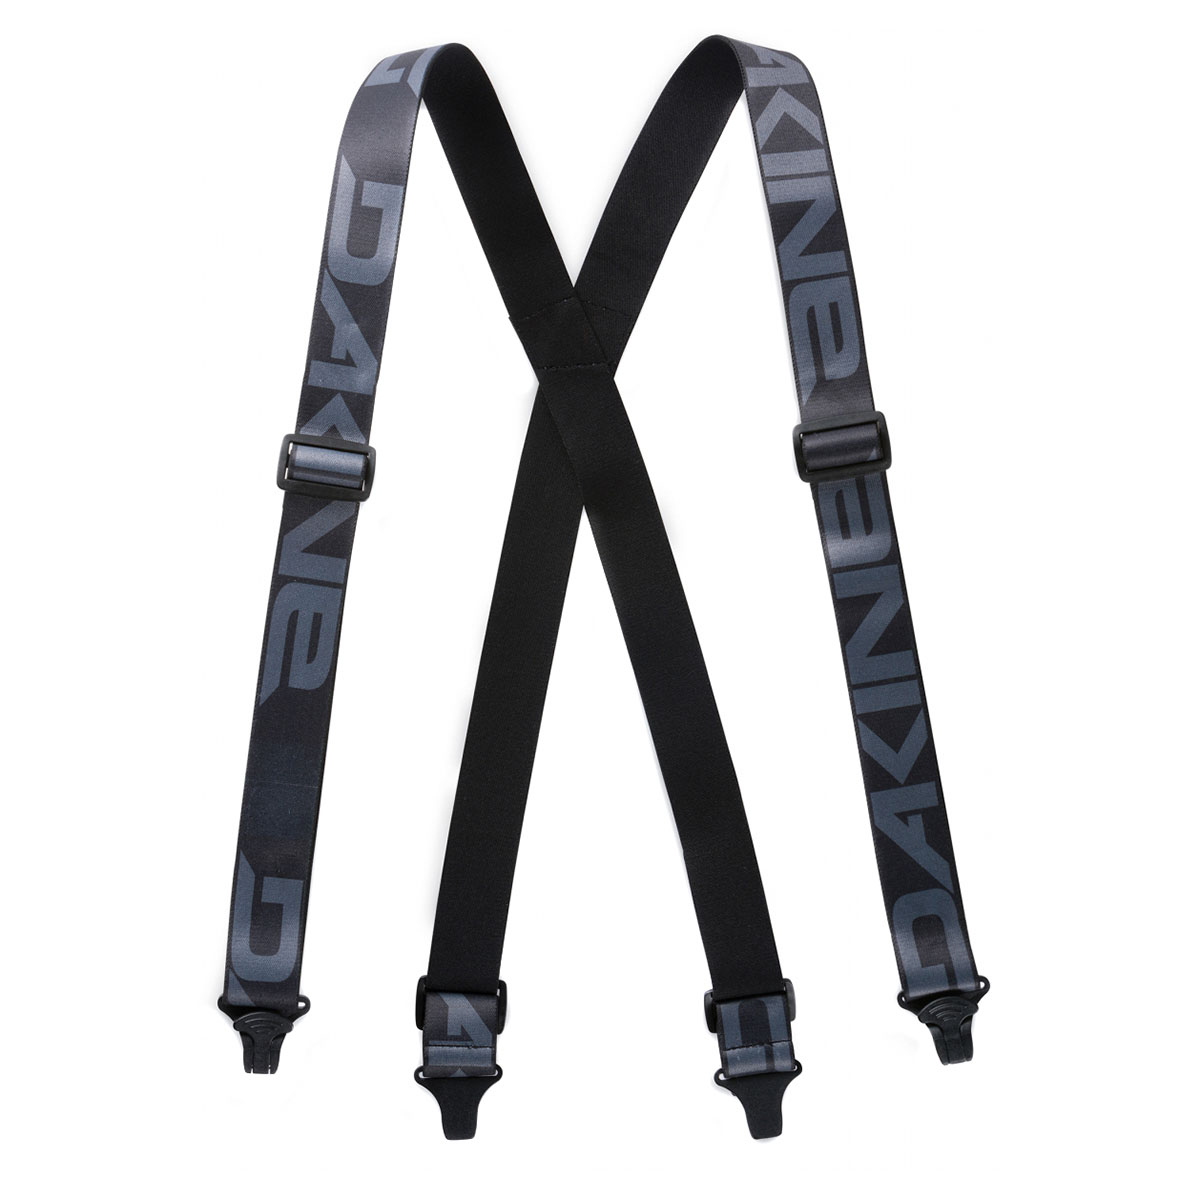 Покажи подтяжки. Подтяжки Dakine. Подтяжки Finntrail Suspenders Black. Chums подтяжки подтяжки Dakine Holdem Suspenders. Подтяжки dimex 4096.